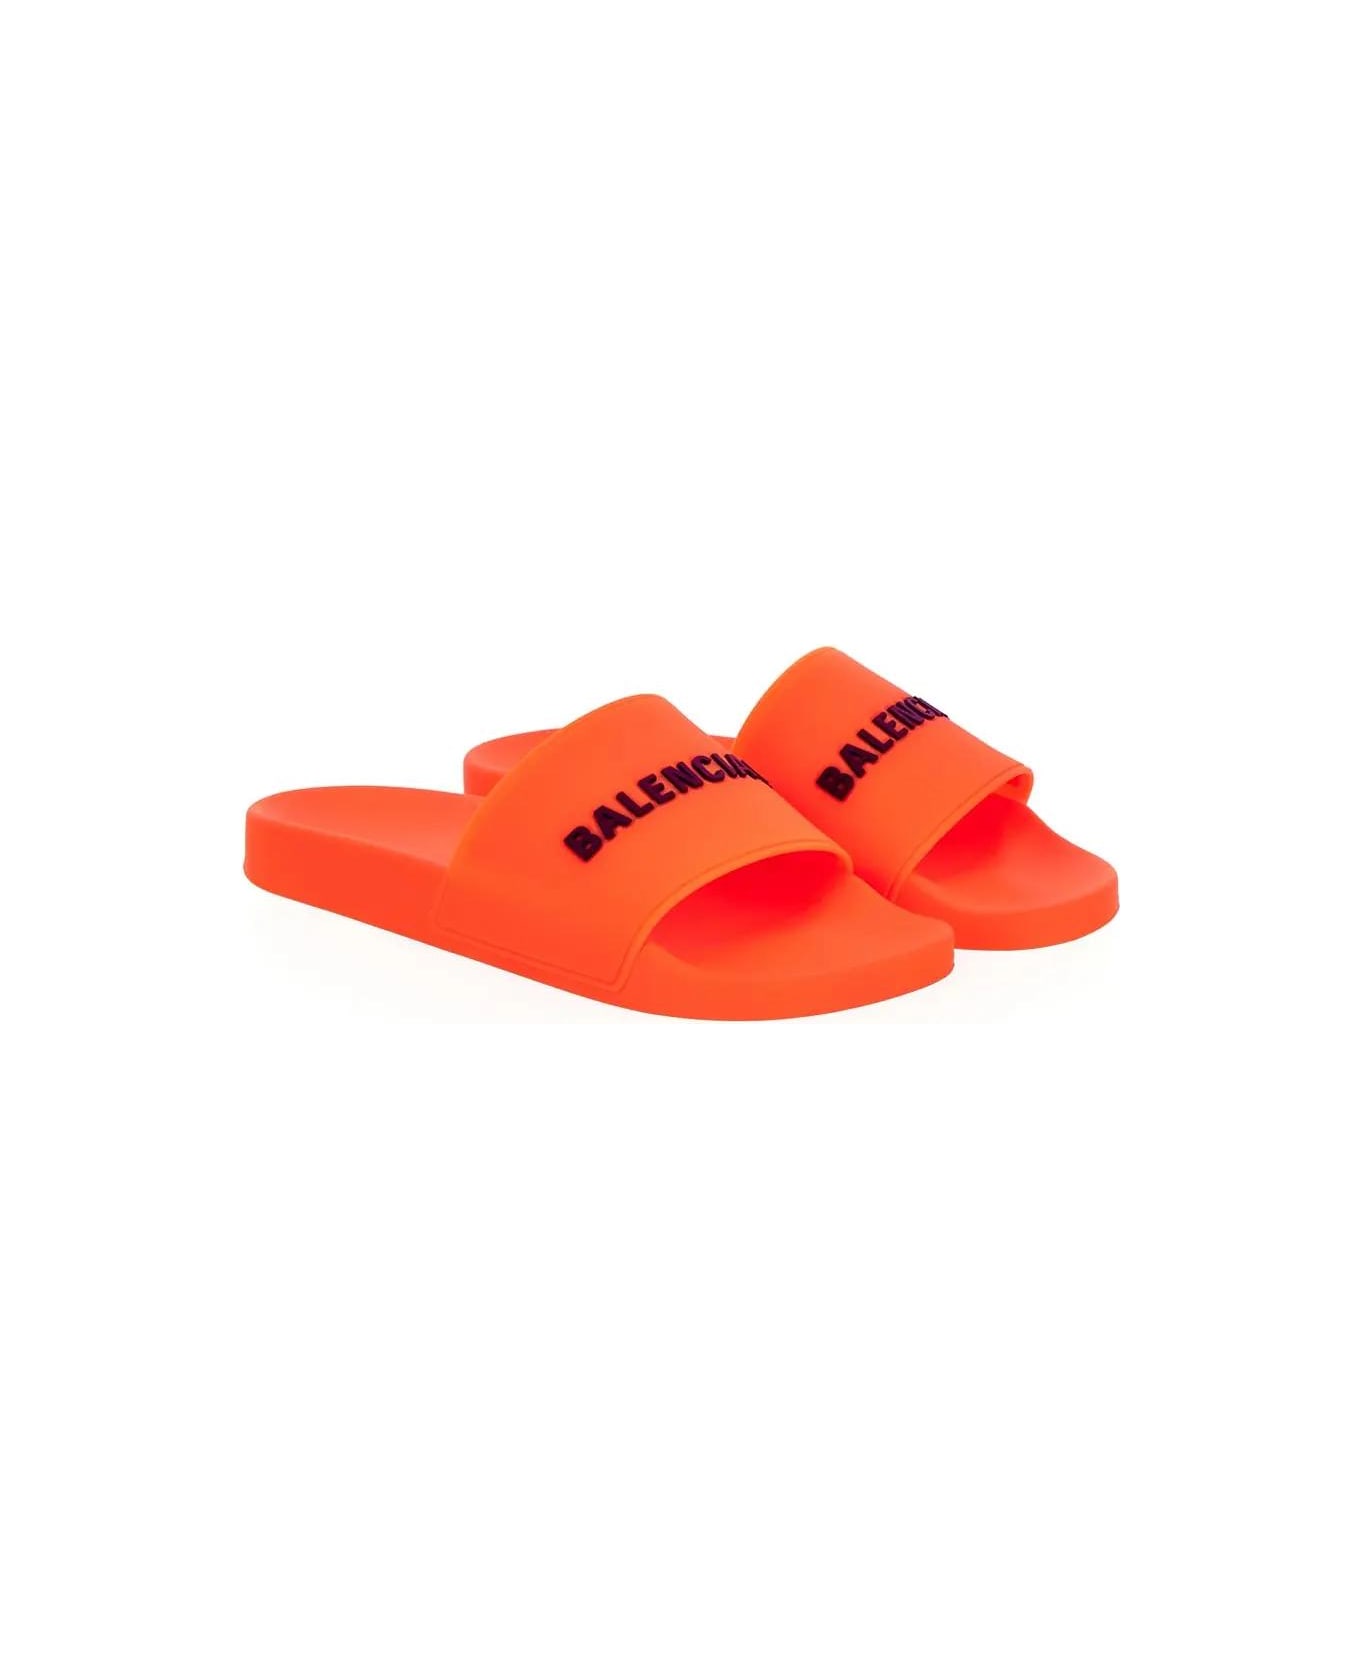 Balenciaga Pool Slide Sandal - Yellow & Orange その他各種シューズ